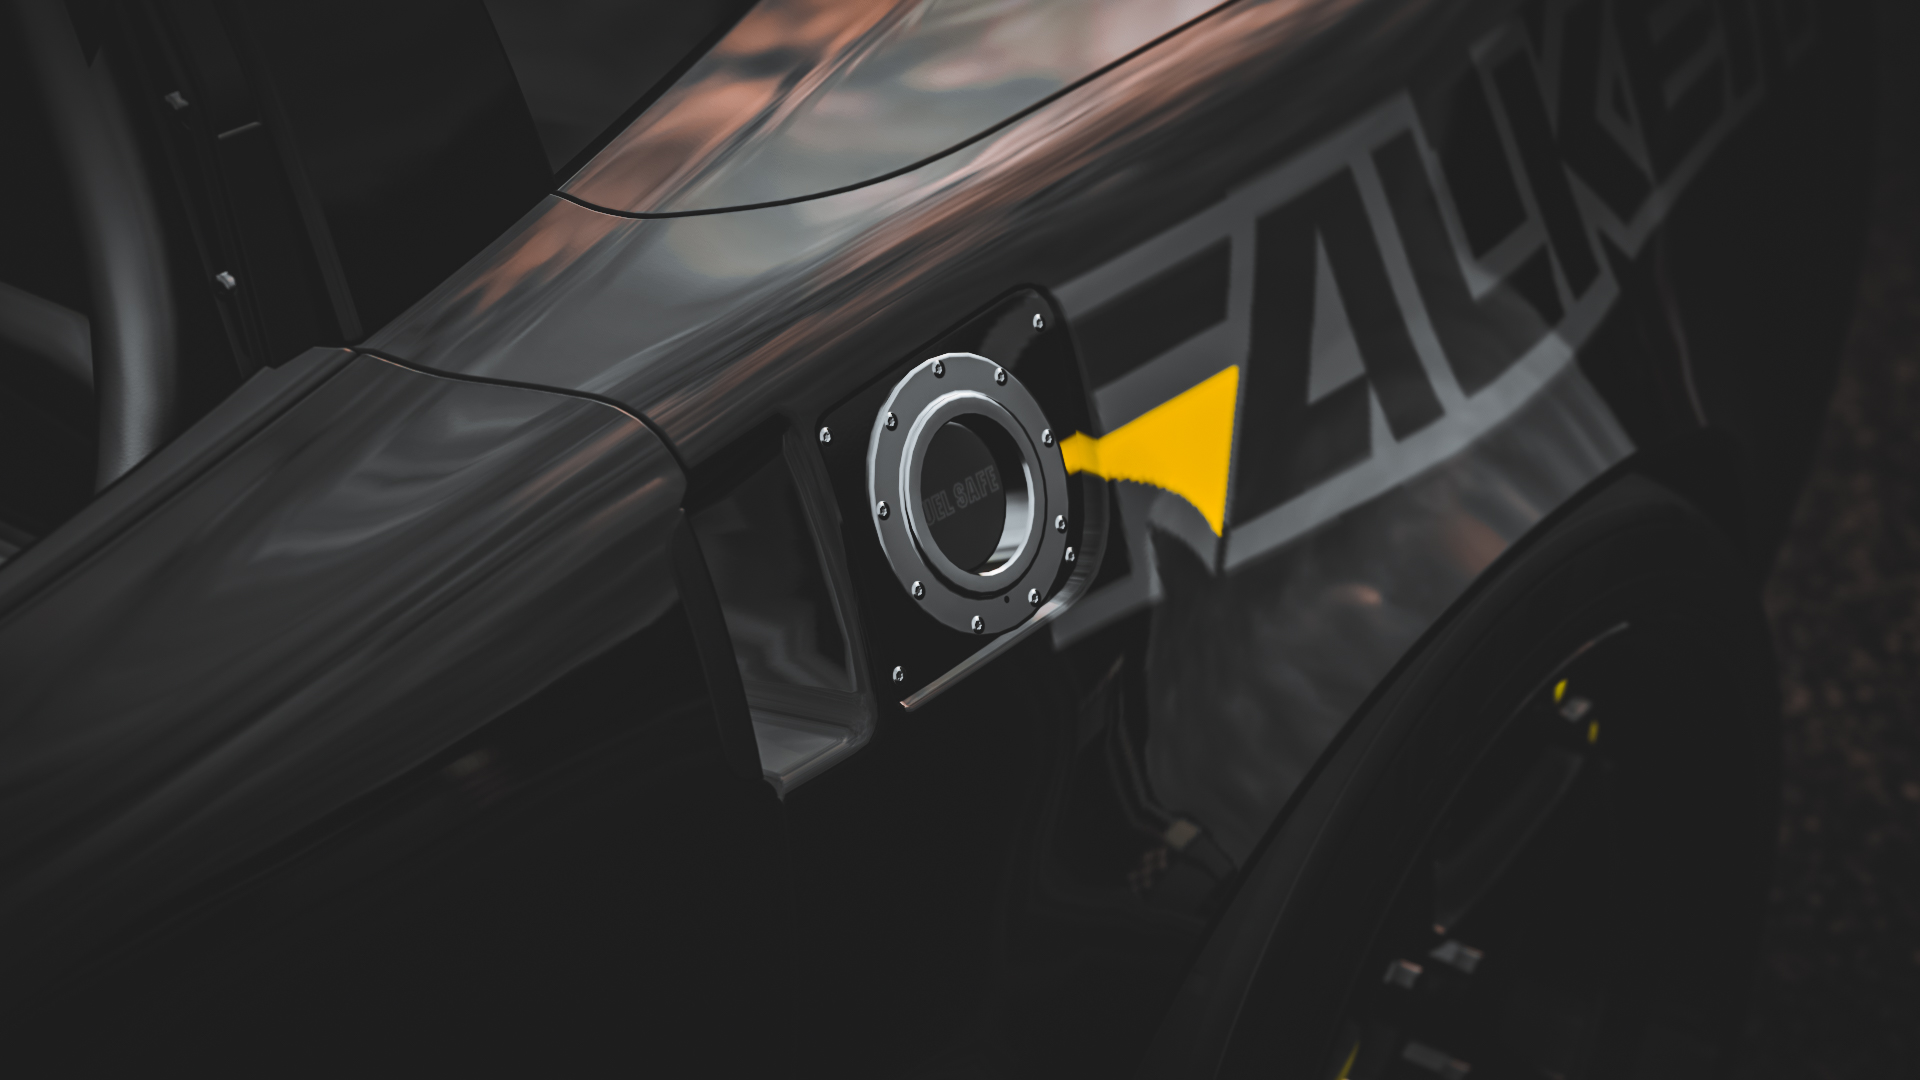 Formula Drift Car Vehicle Video Games Forza Forza Horizon 4 Chevrolet Corvette Corvette Corvette C6 1920x1080